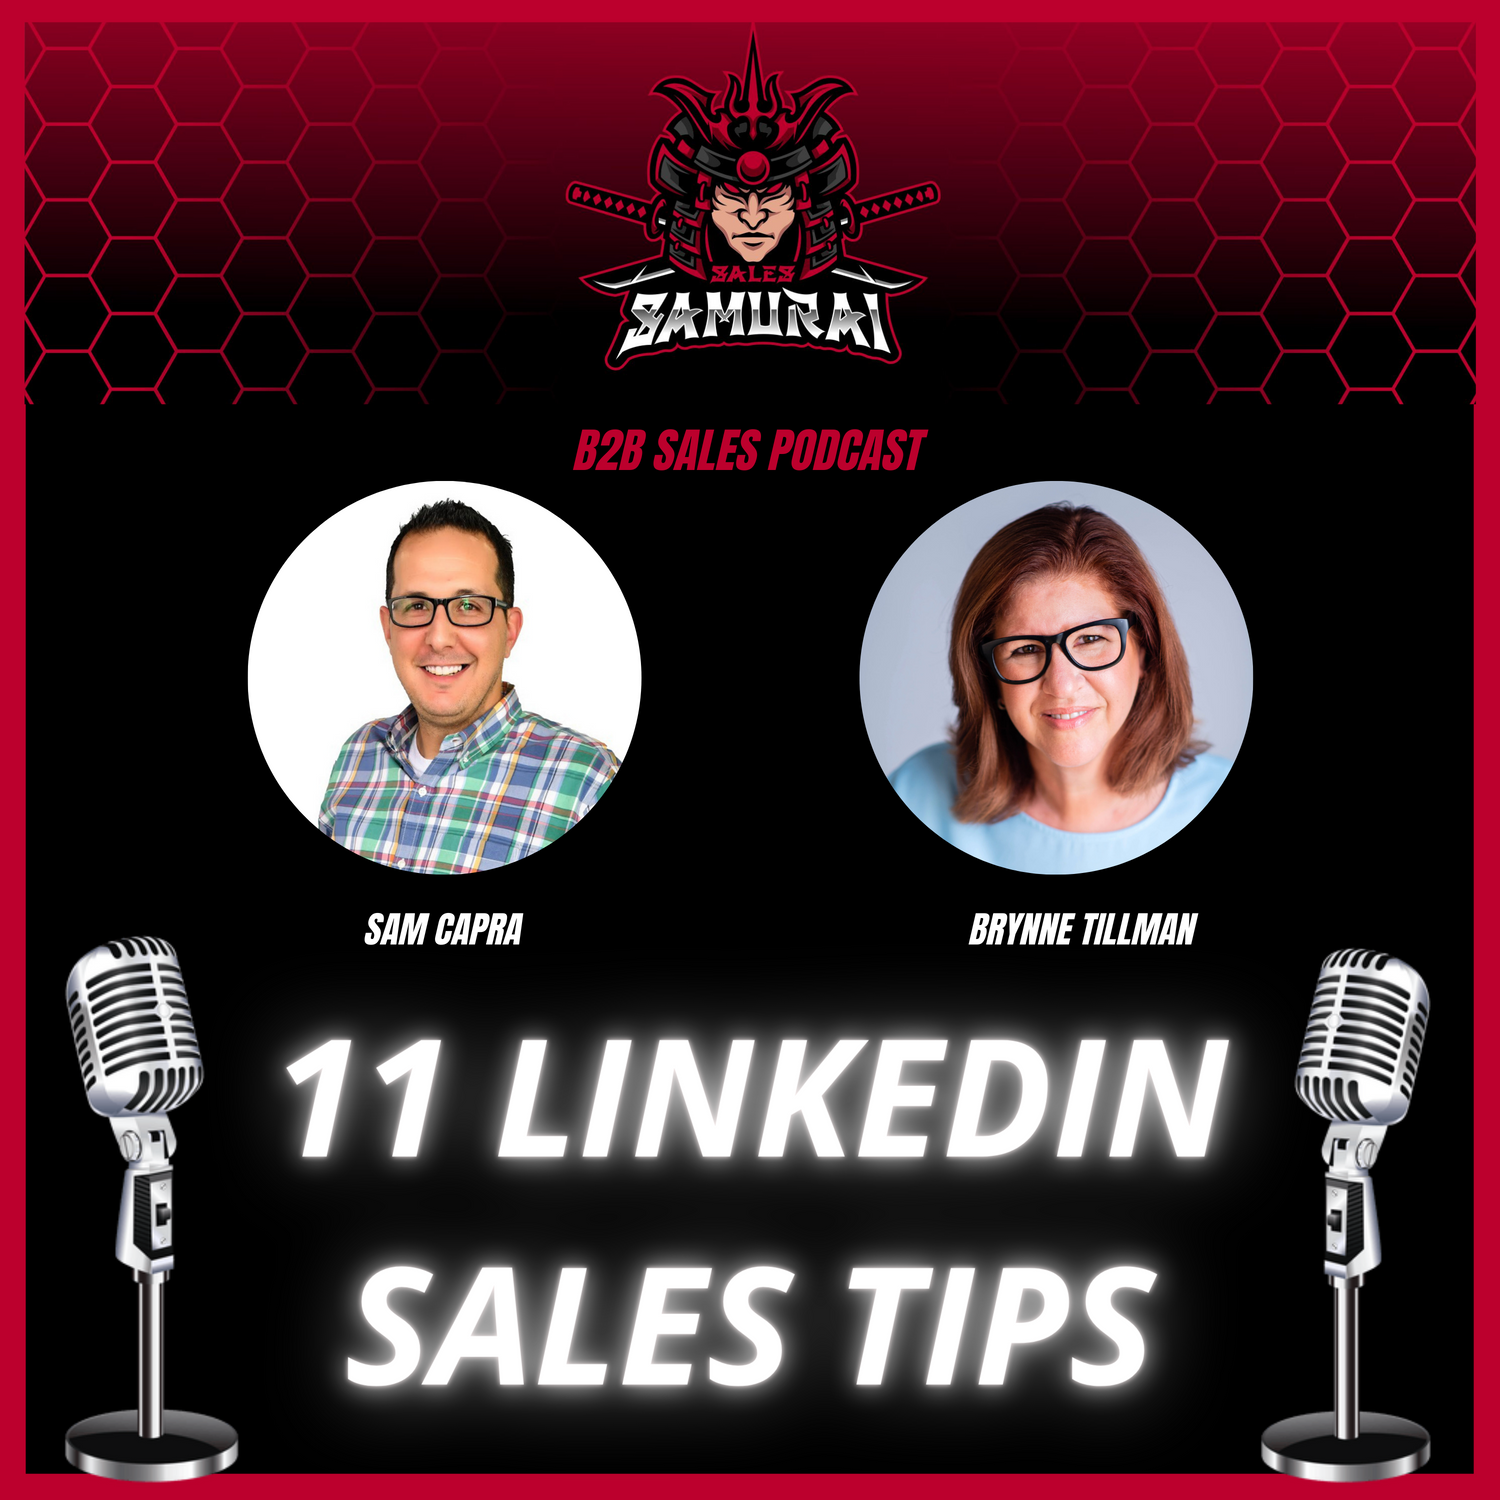 11 Linkedin Tips for Sales Professionals Image